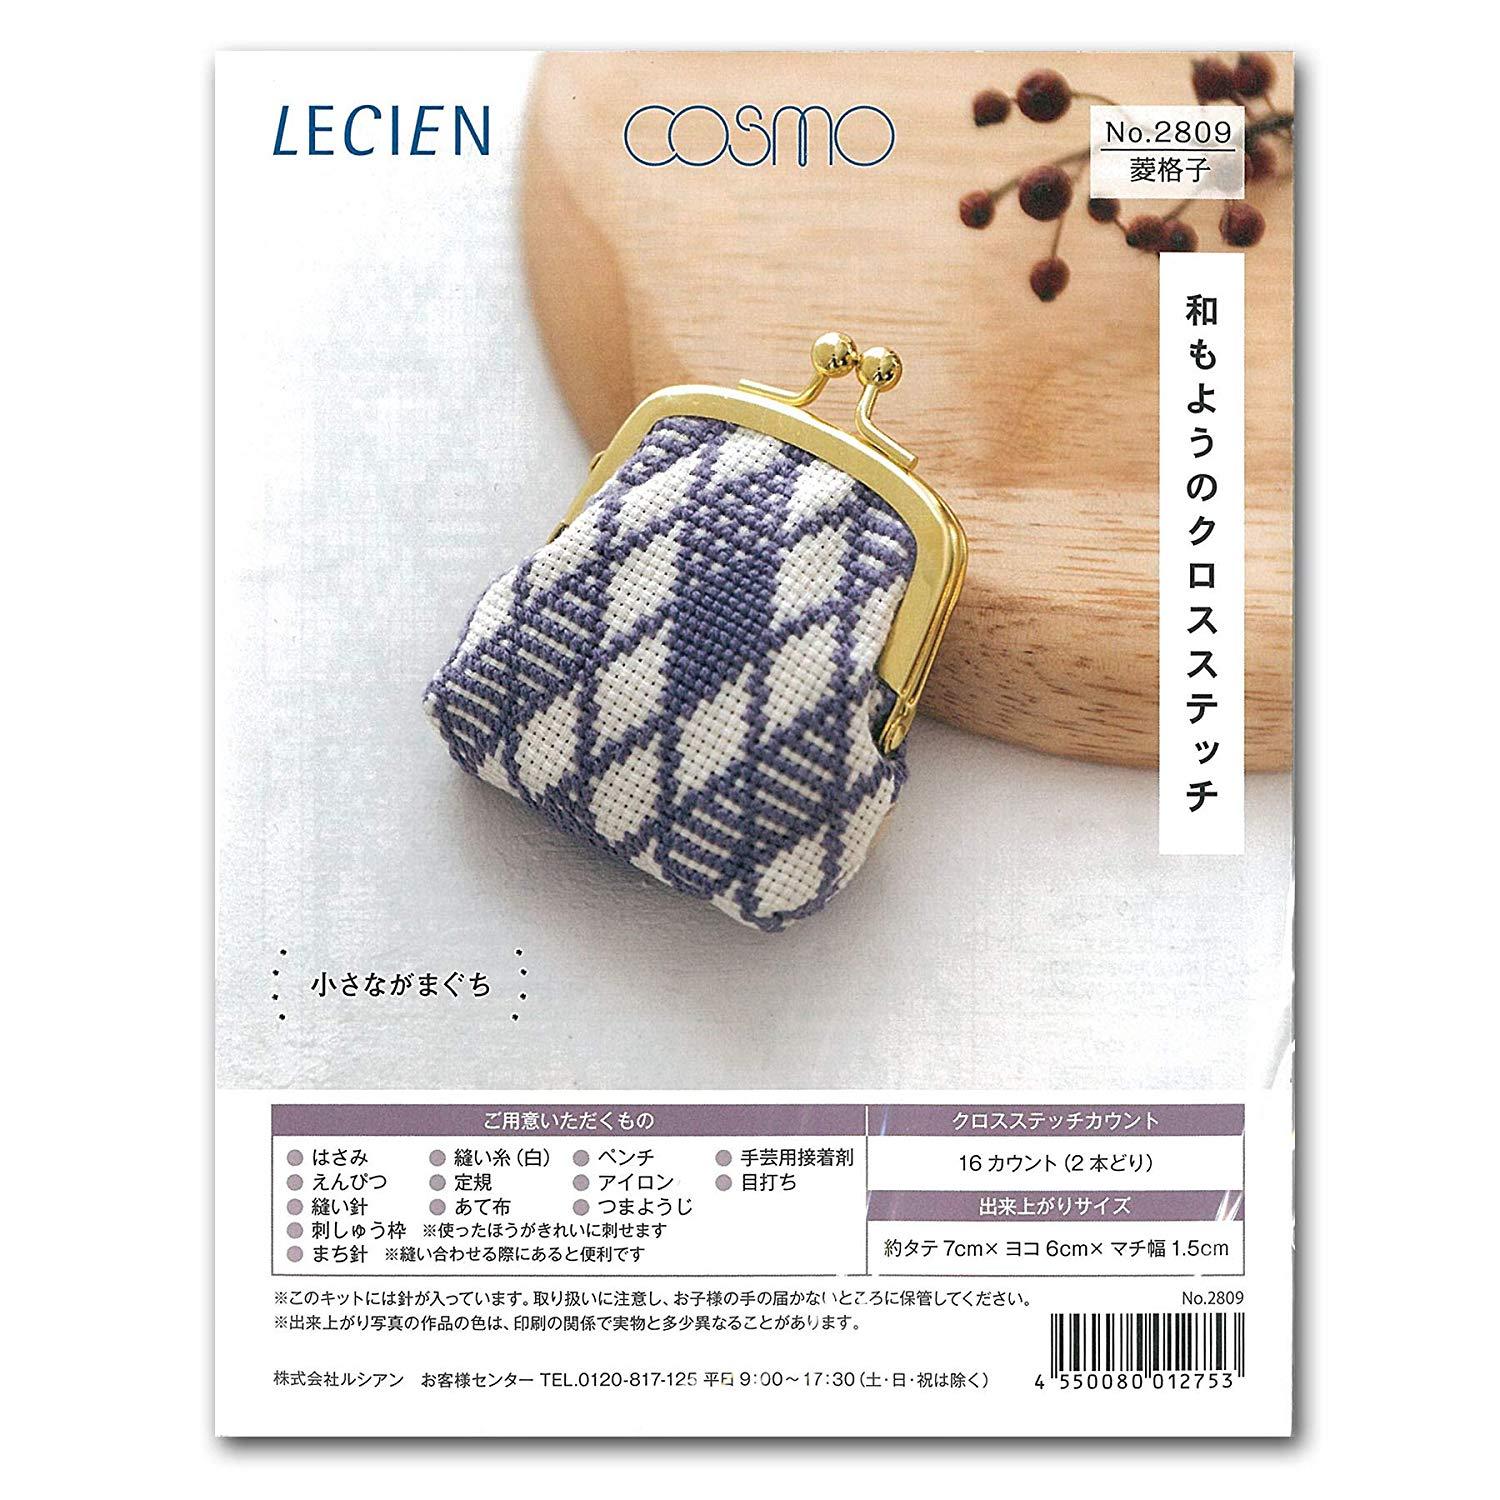 LECIEN (ルシアン) 刺繍キット 和もようのクロスステッチ 小さながまぐち 菱格子・2809 (1402684)